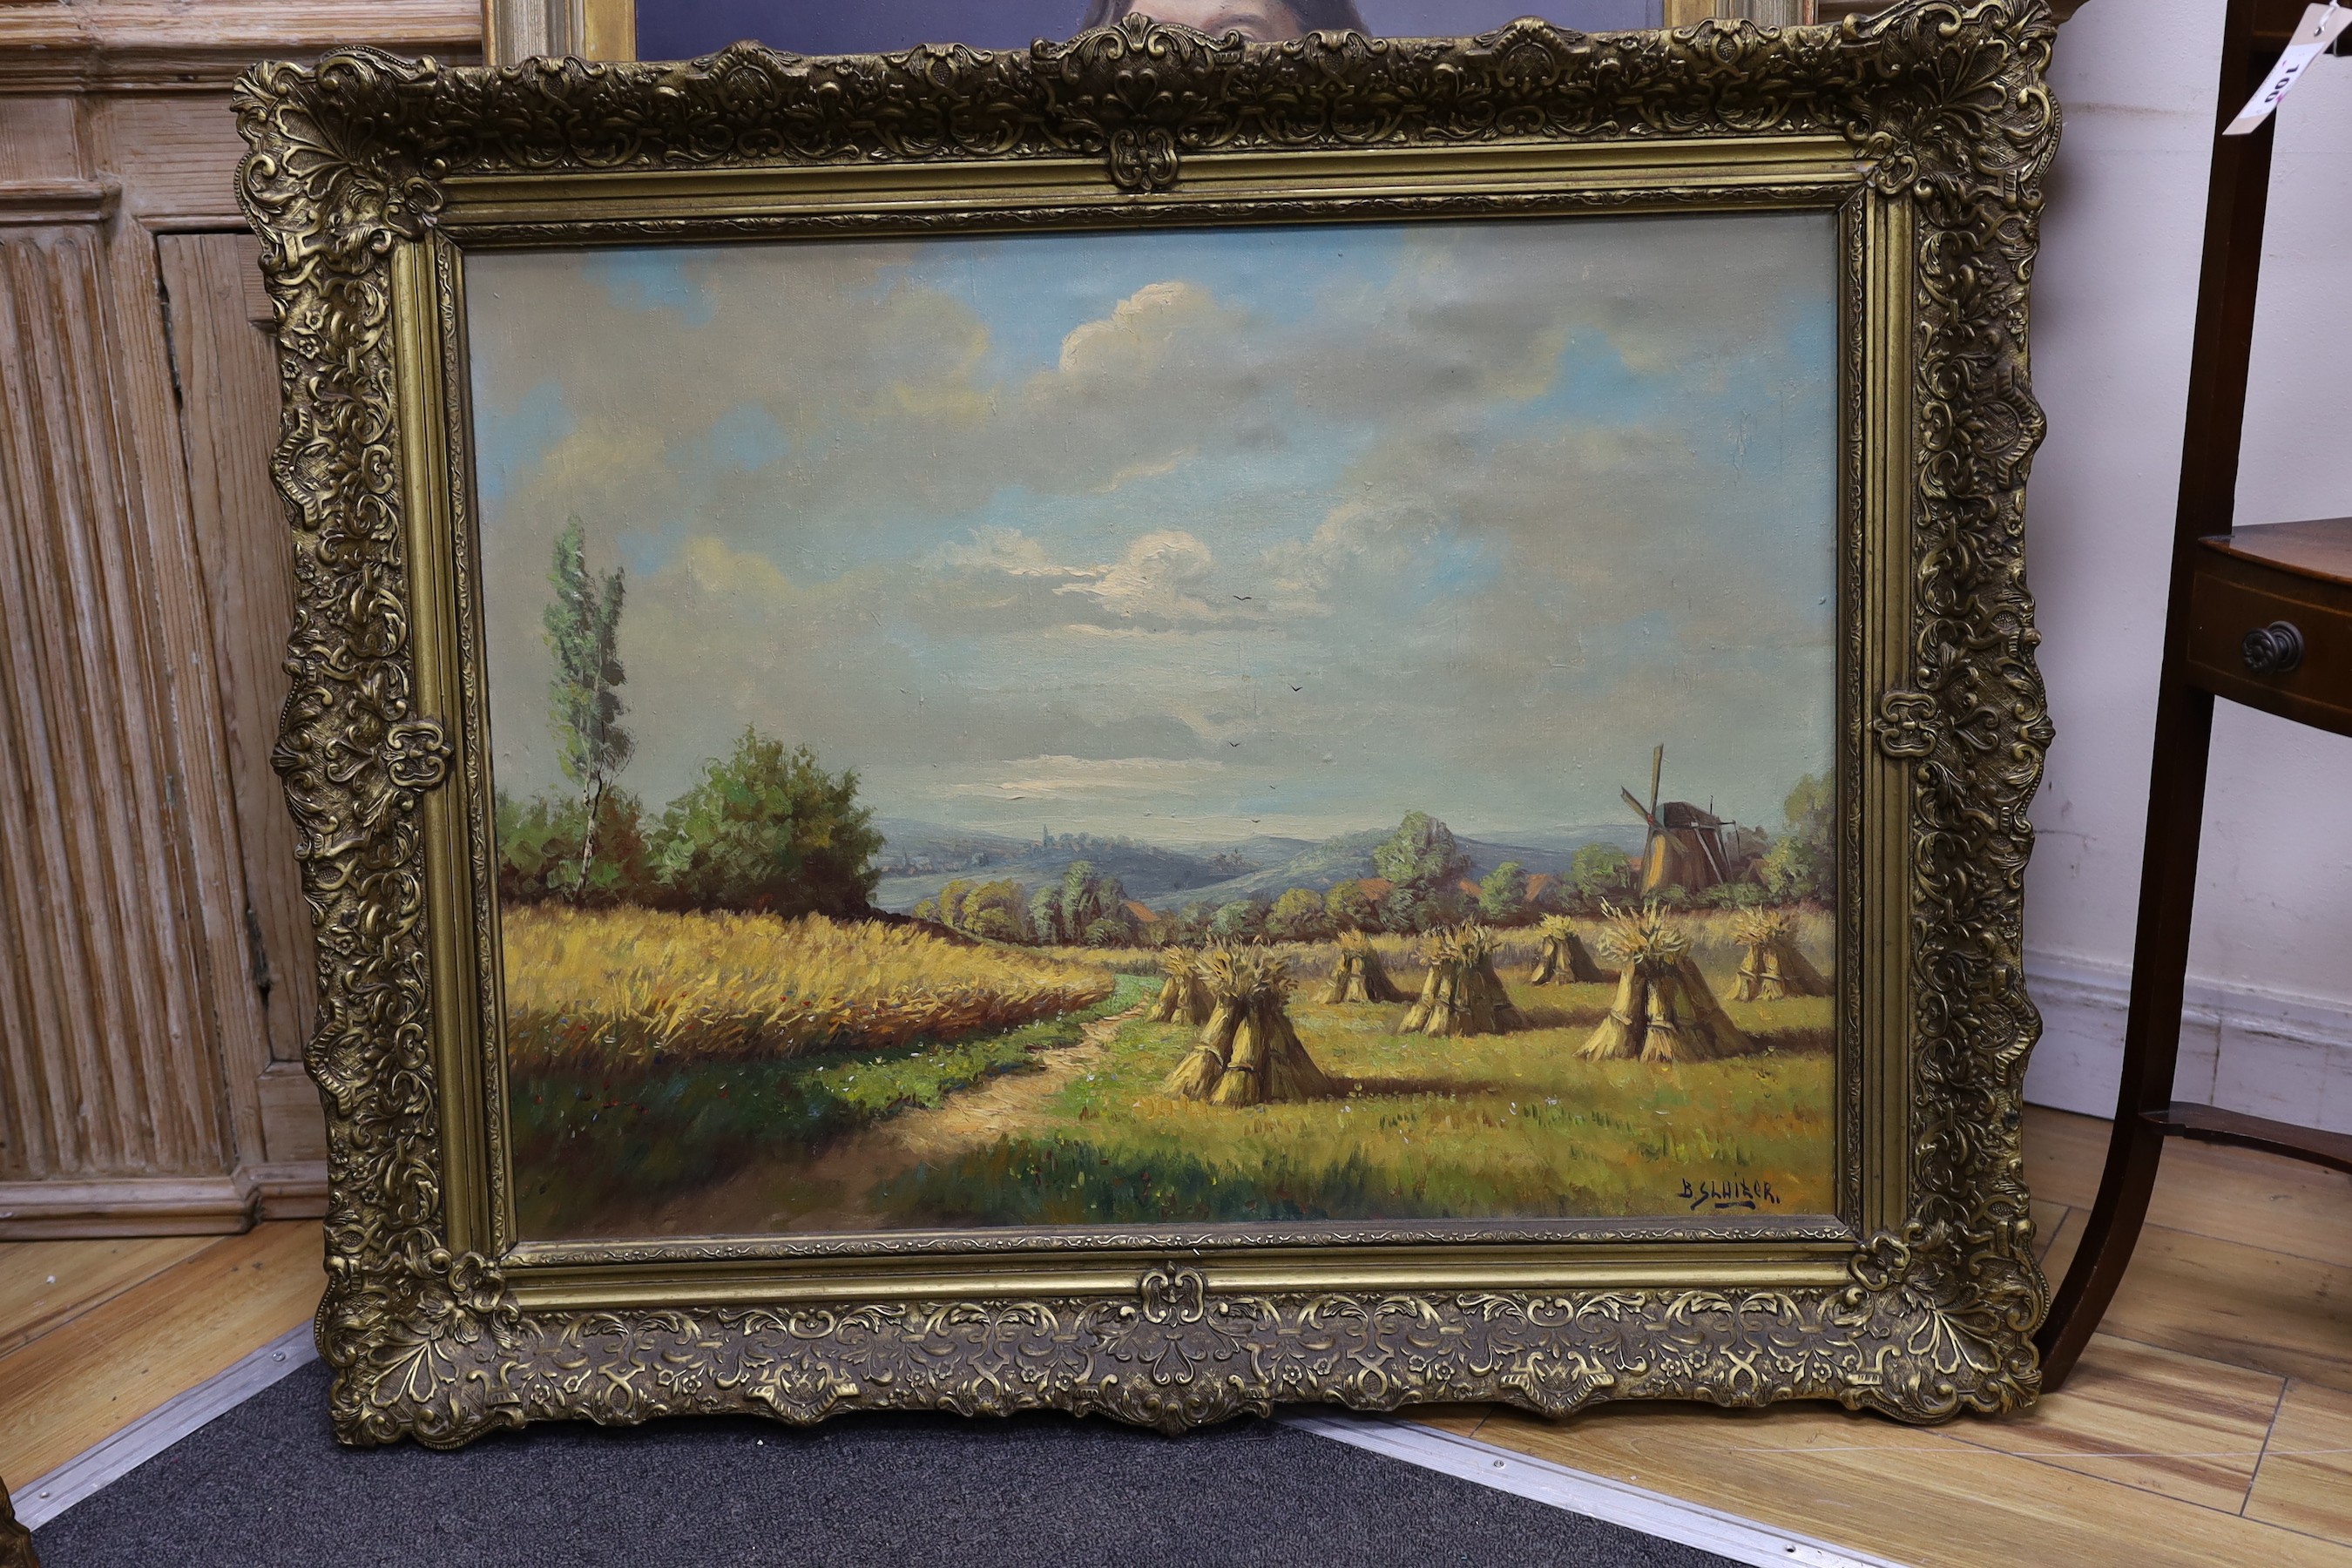 B. Sluiter, oil on canvas, Landscape with harvest field, signed, 59 x 79cm